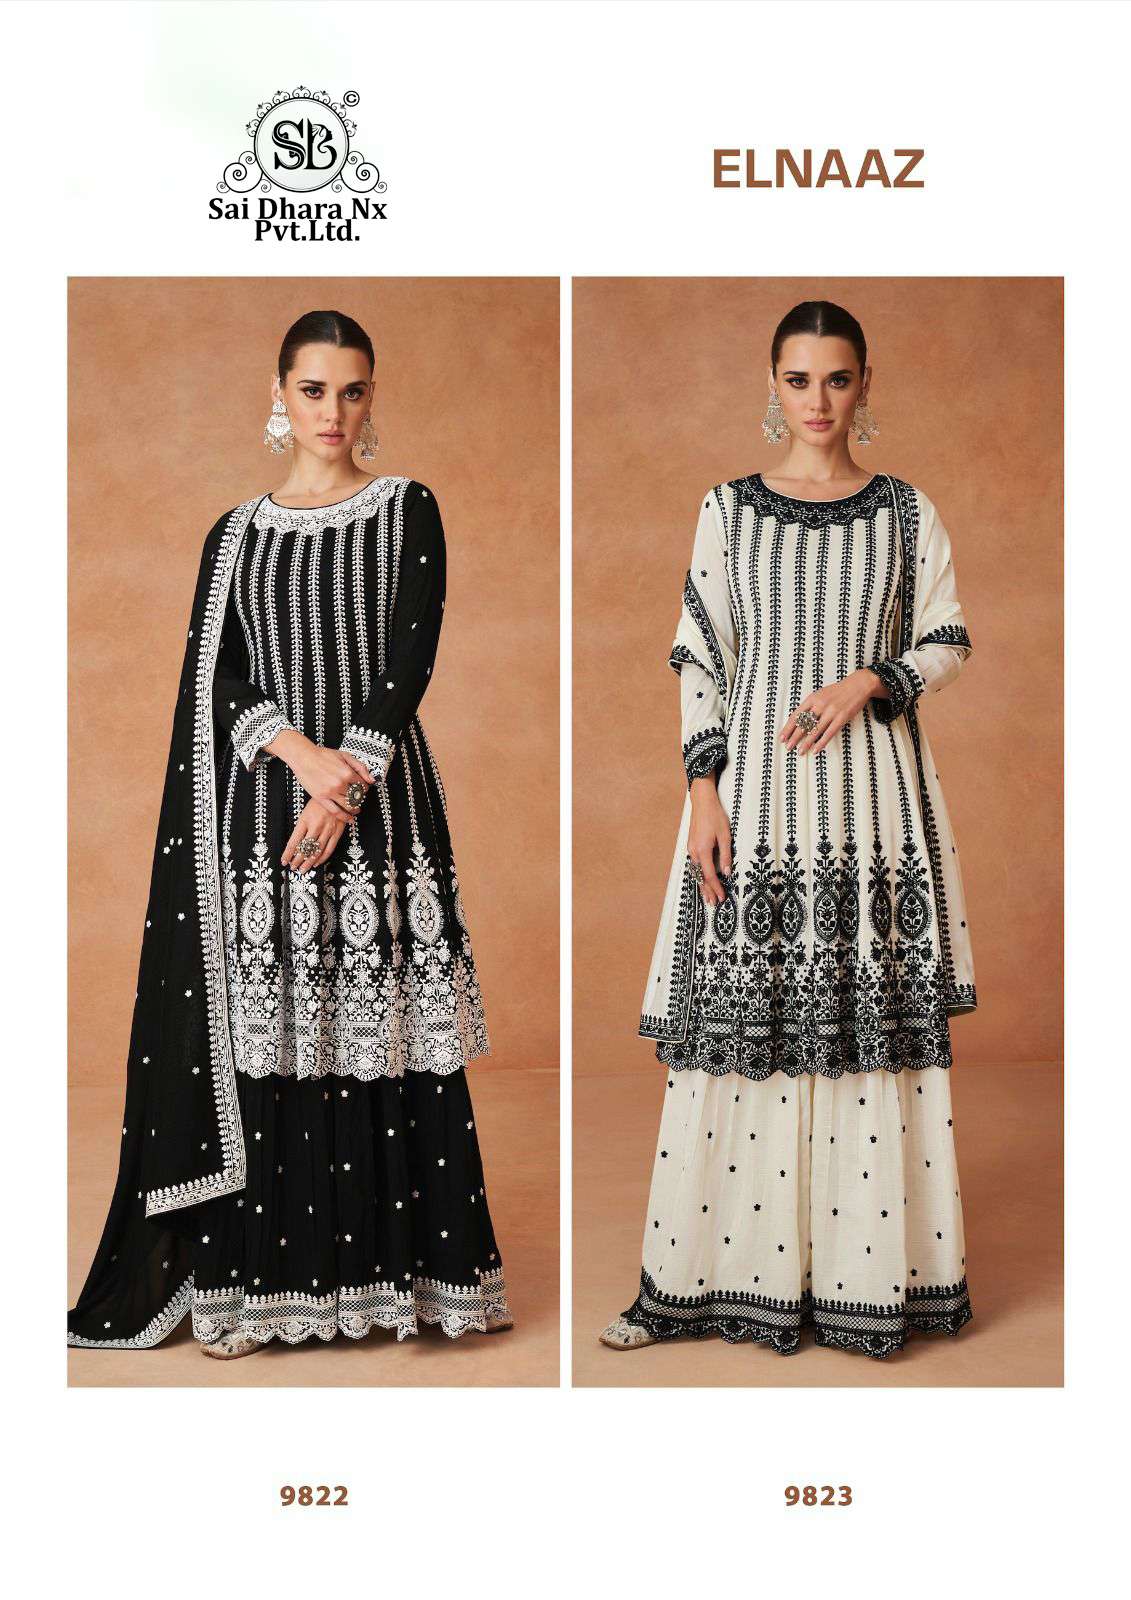 aashirwad careation presents newly launch 3 piece sharara garara style suit wholesale shop in surat saidharanx 2023 10 30 17 15 43